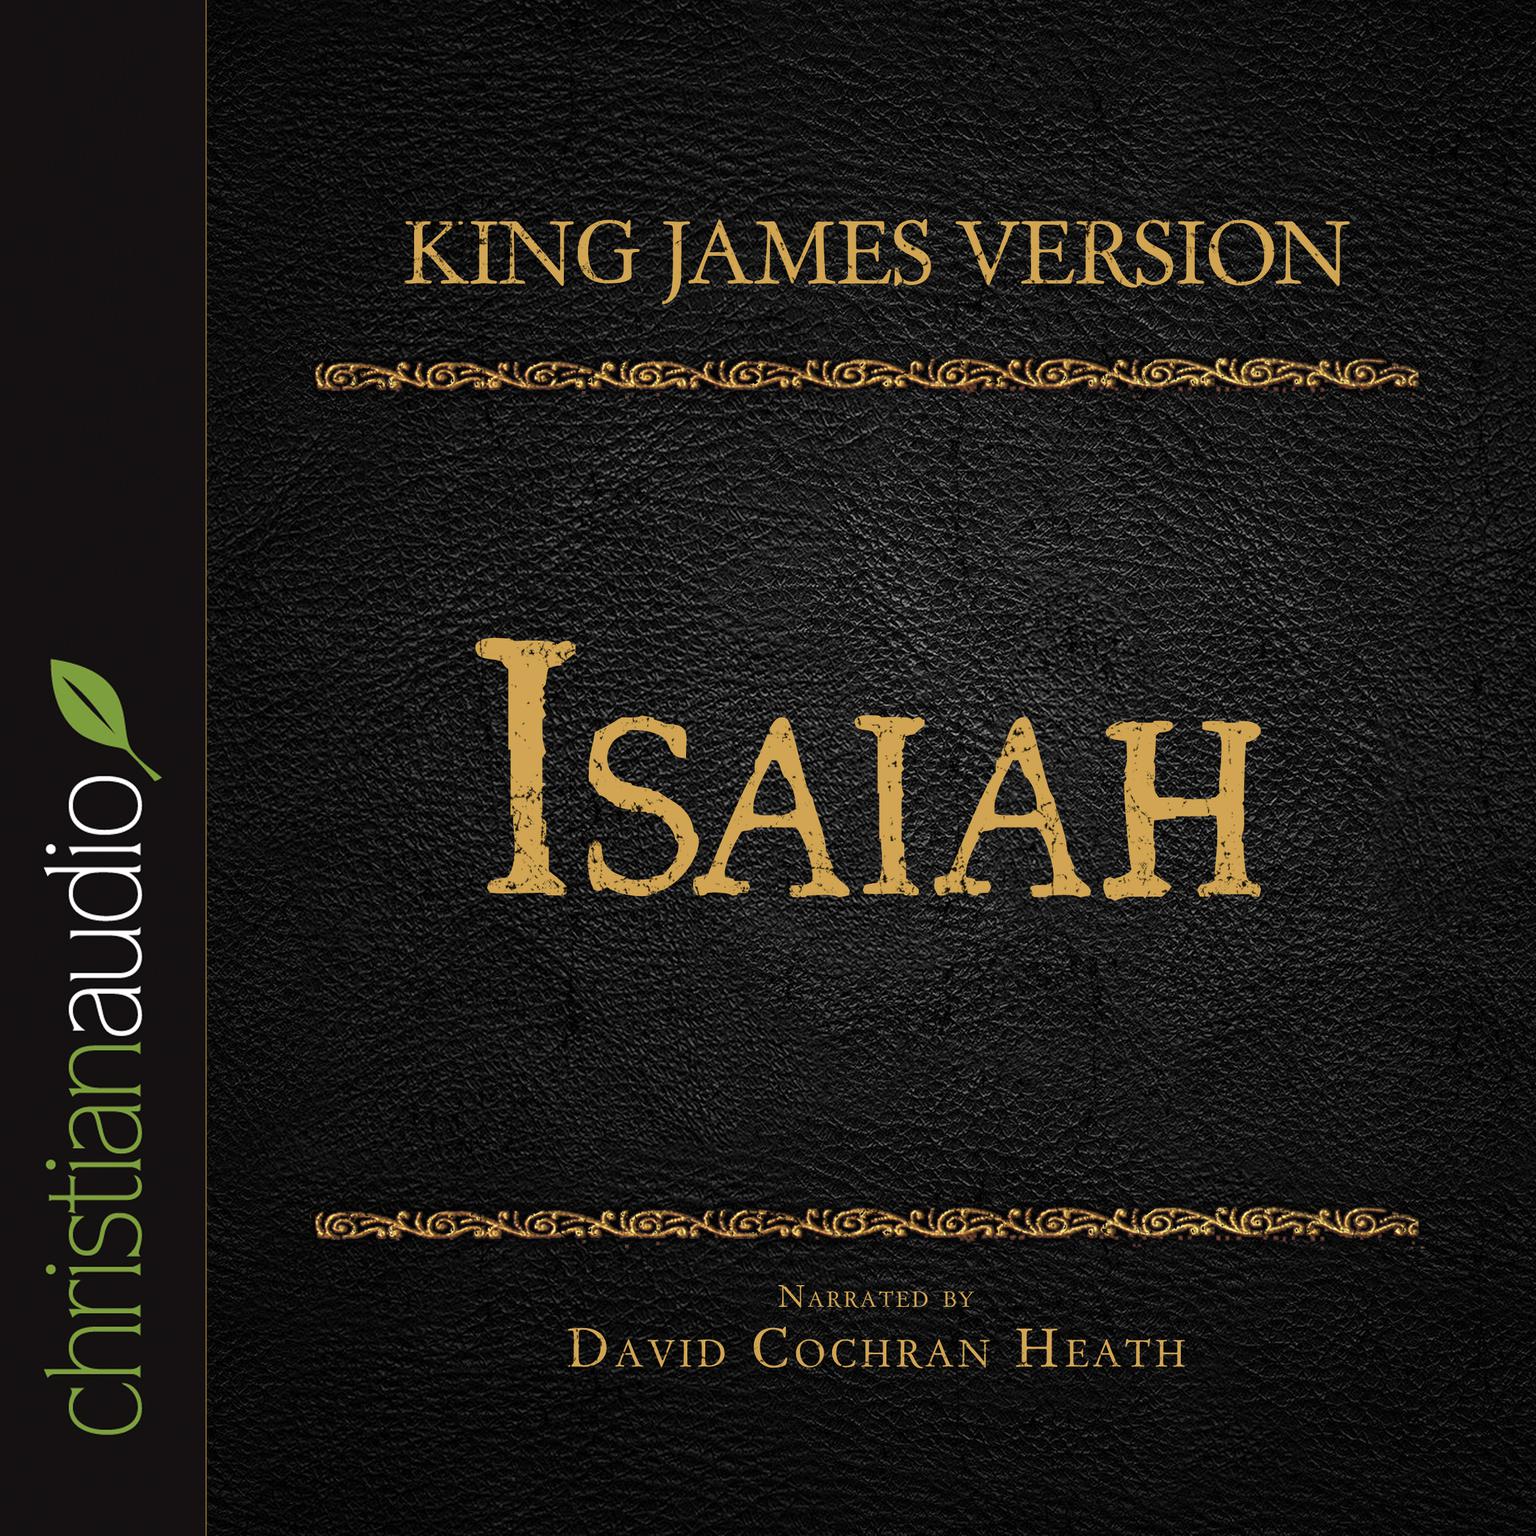 Holy Bible in Audio - King James Version: Isaiah Audiobook, by David Cochran Heath